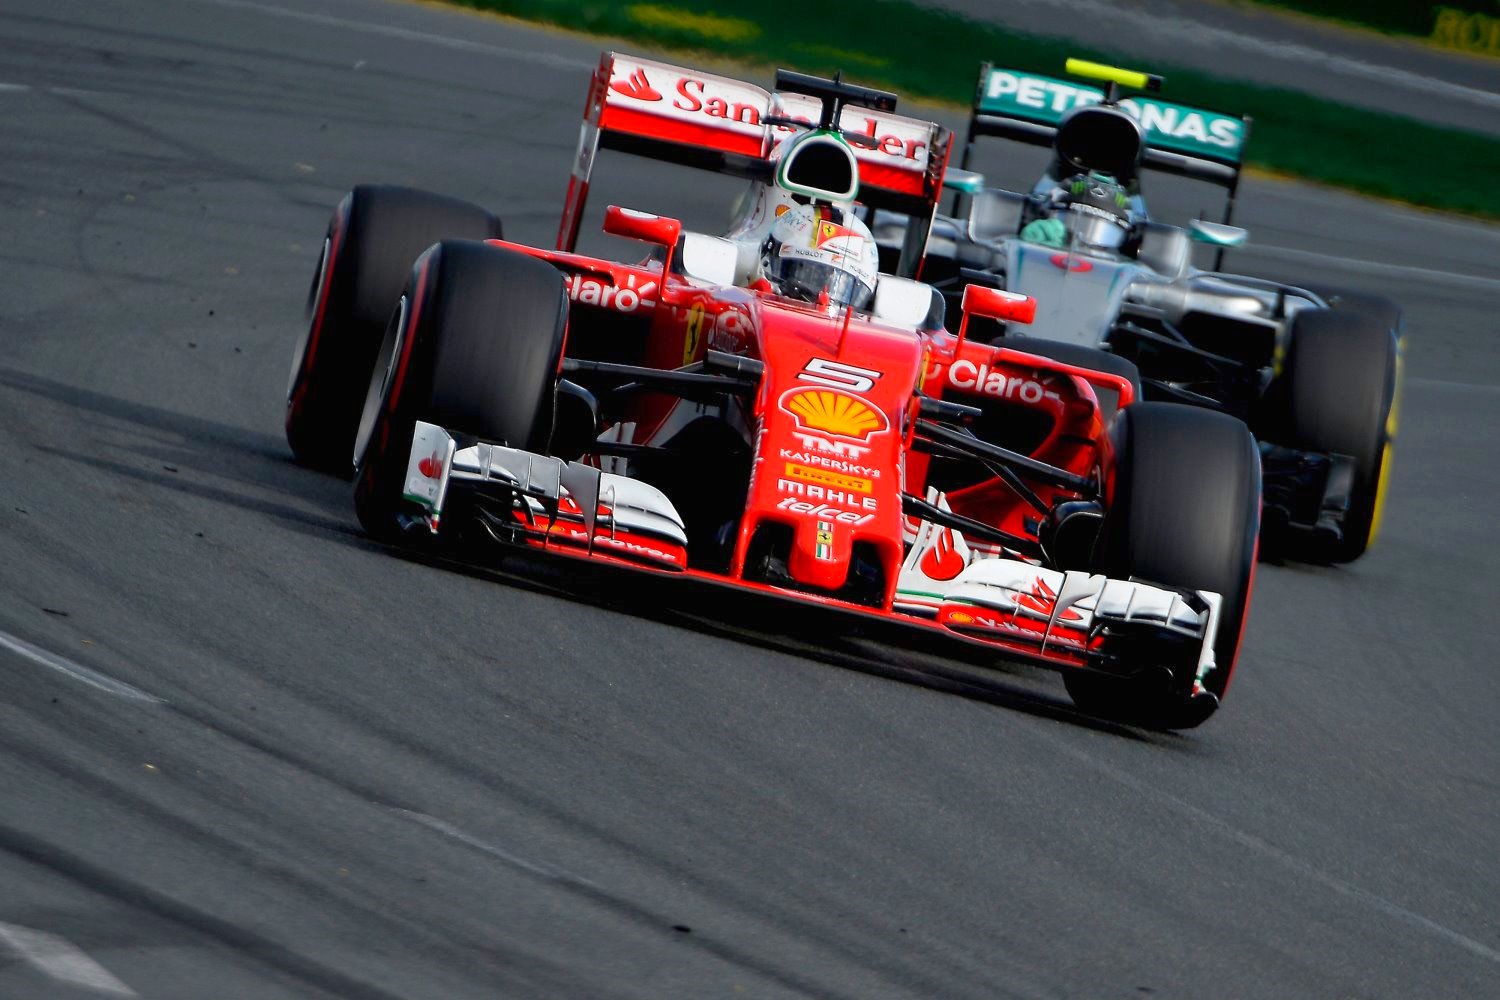 Vettel leads Rosberg in Melbourne. Remember Mercedes has far more engine tokens left for 2016